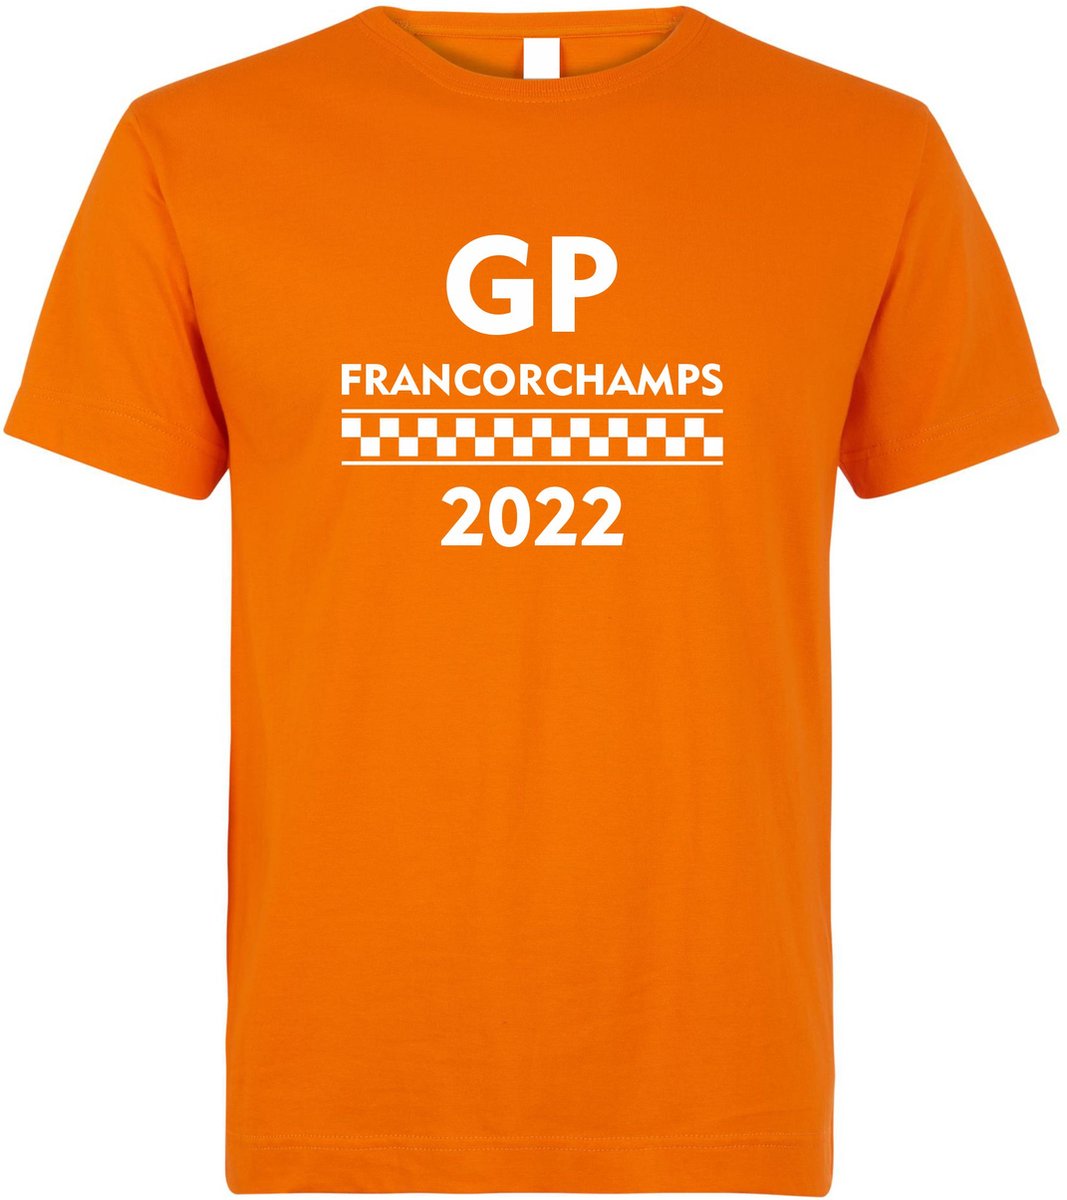 T-shirt kinderen GP Francorchamps 2022 | Max Verstappen / Red Bull Racing / Formule 1 fan | Grand Prix Circuit Spa-Francorchamps | kleding shirt | Oranje | maat 104